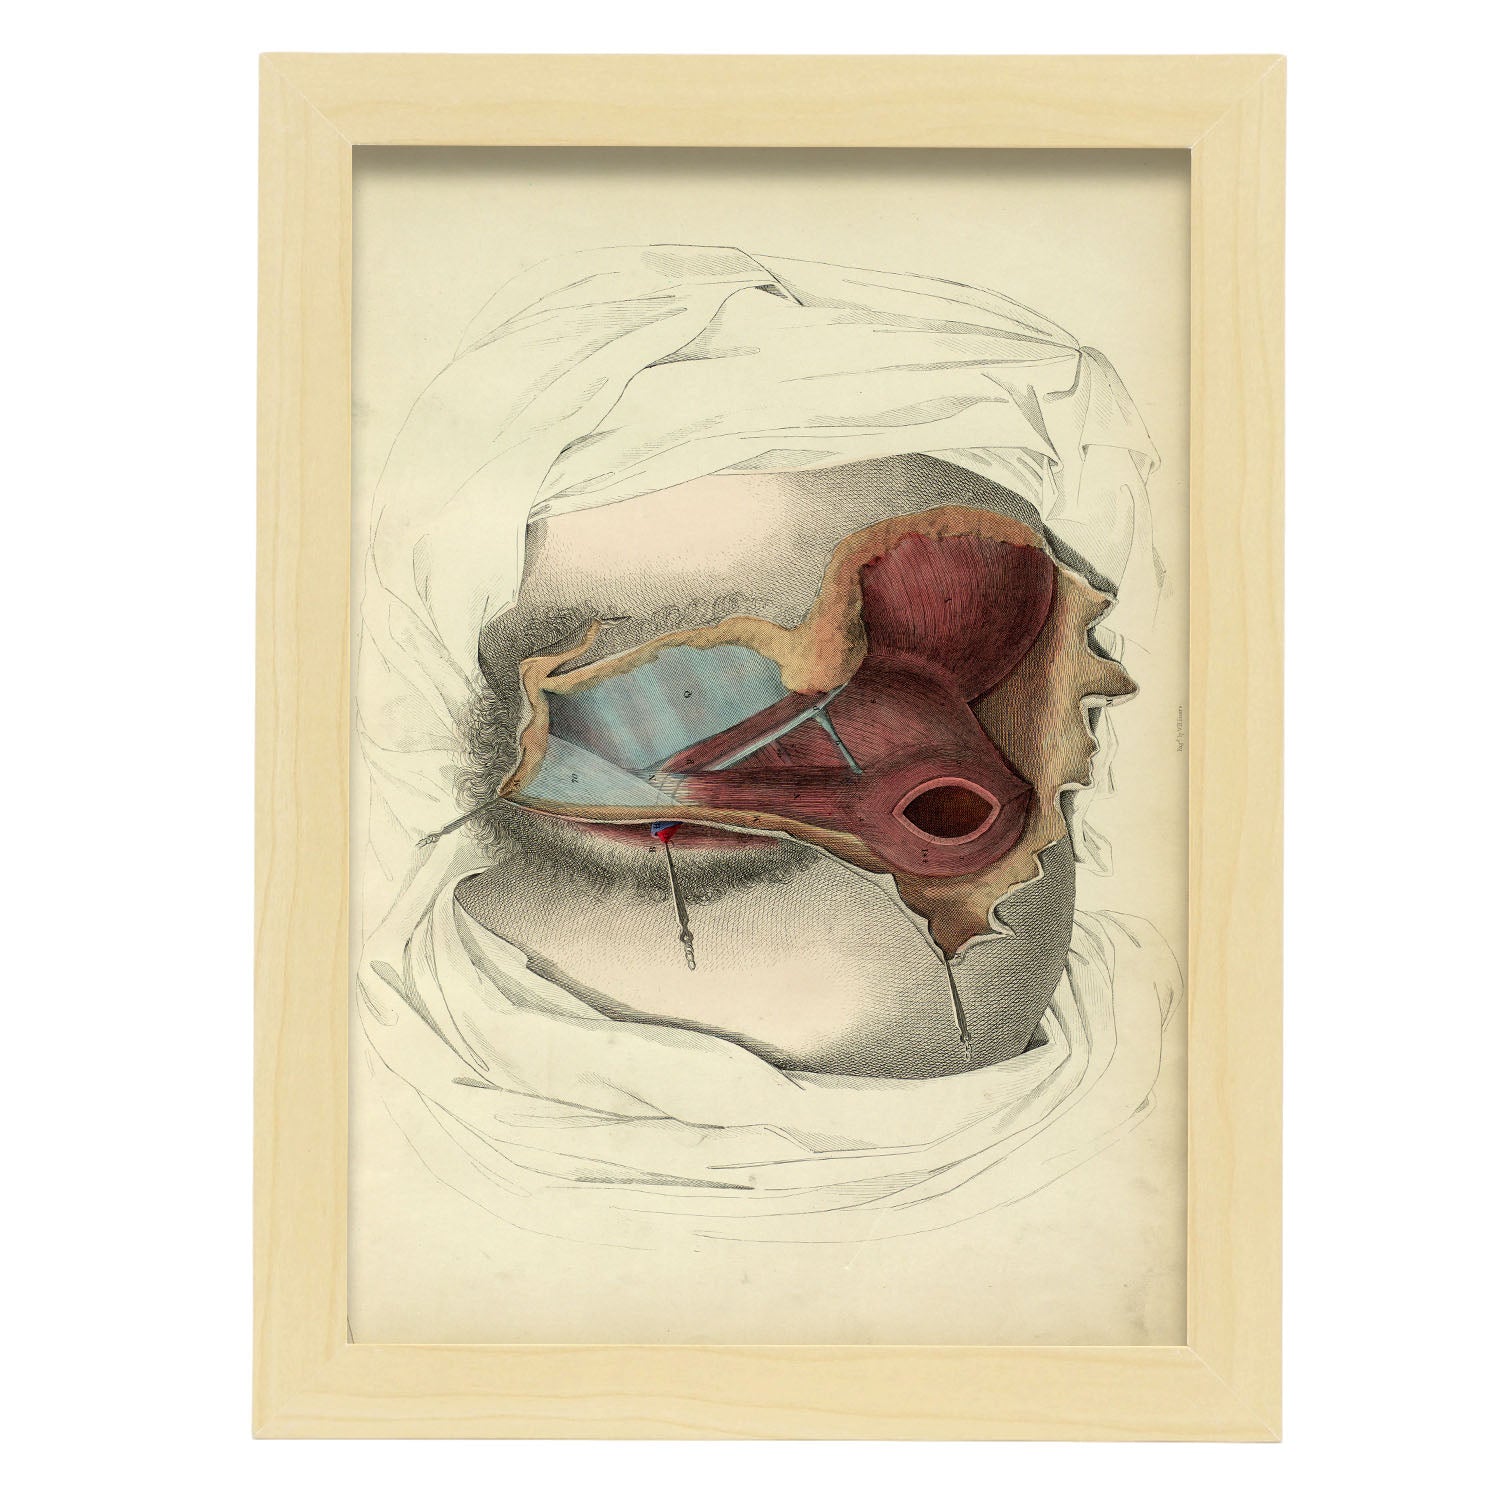 Dissection of the perineum, female-Artwork-Nacnic-A4-Marco Madera clara-Nacnic Estudio SL